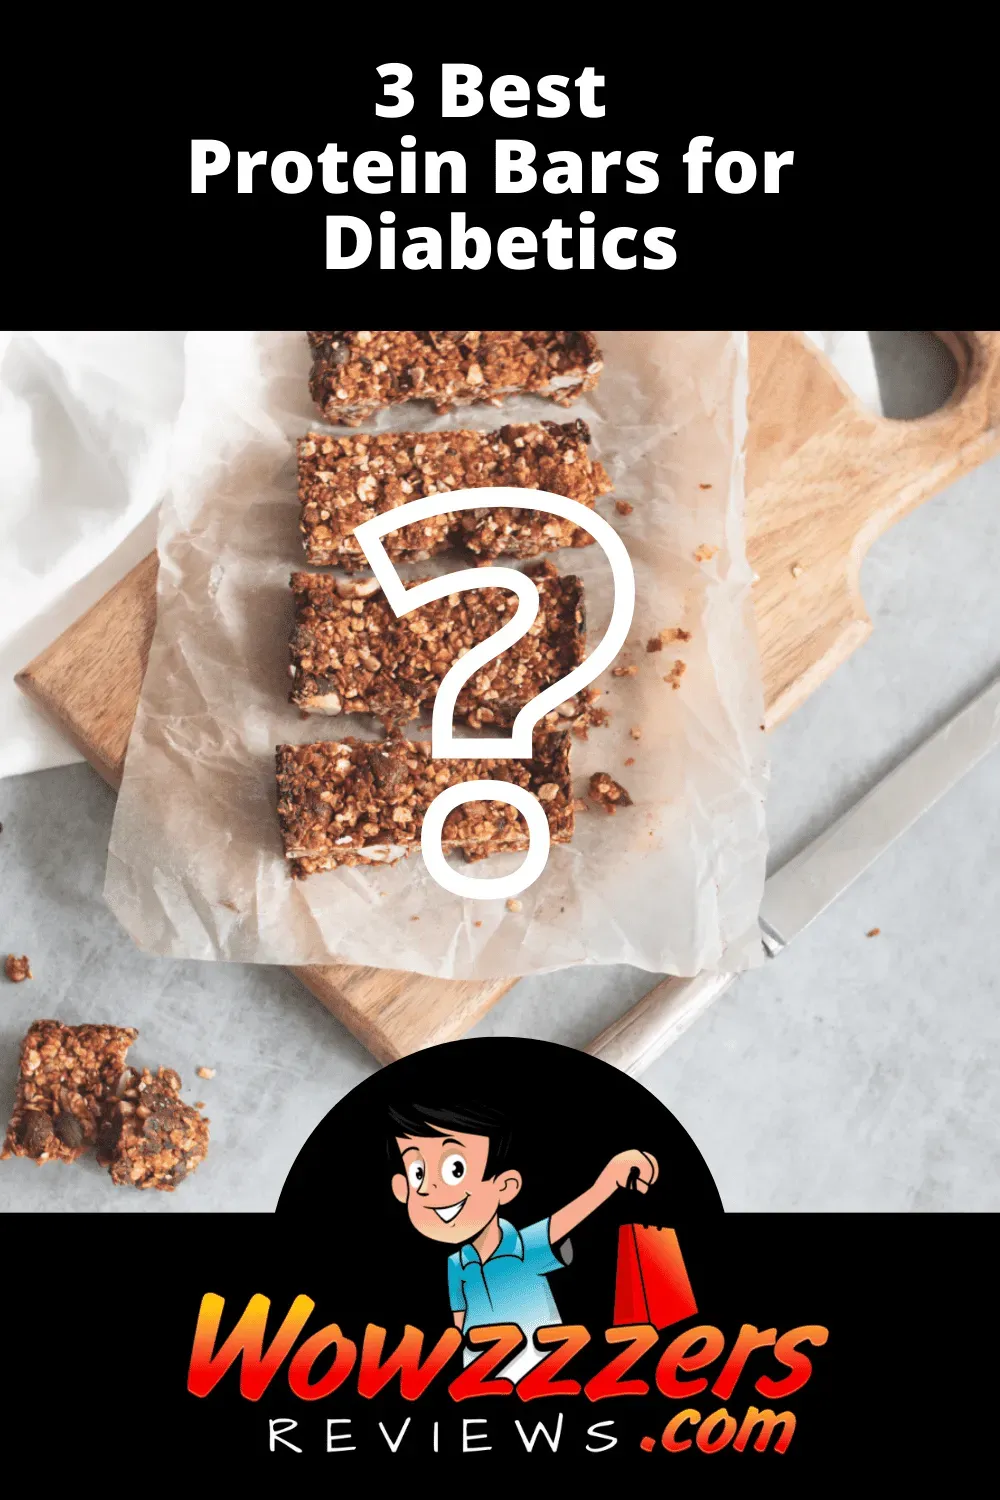 Best Protein Bar for Diabetics